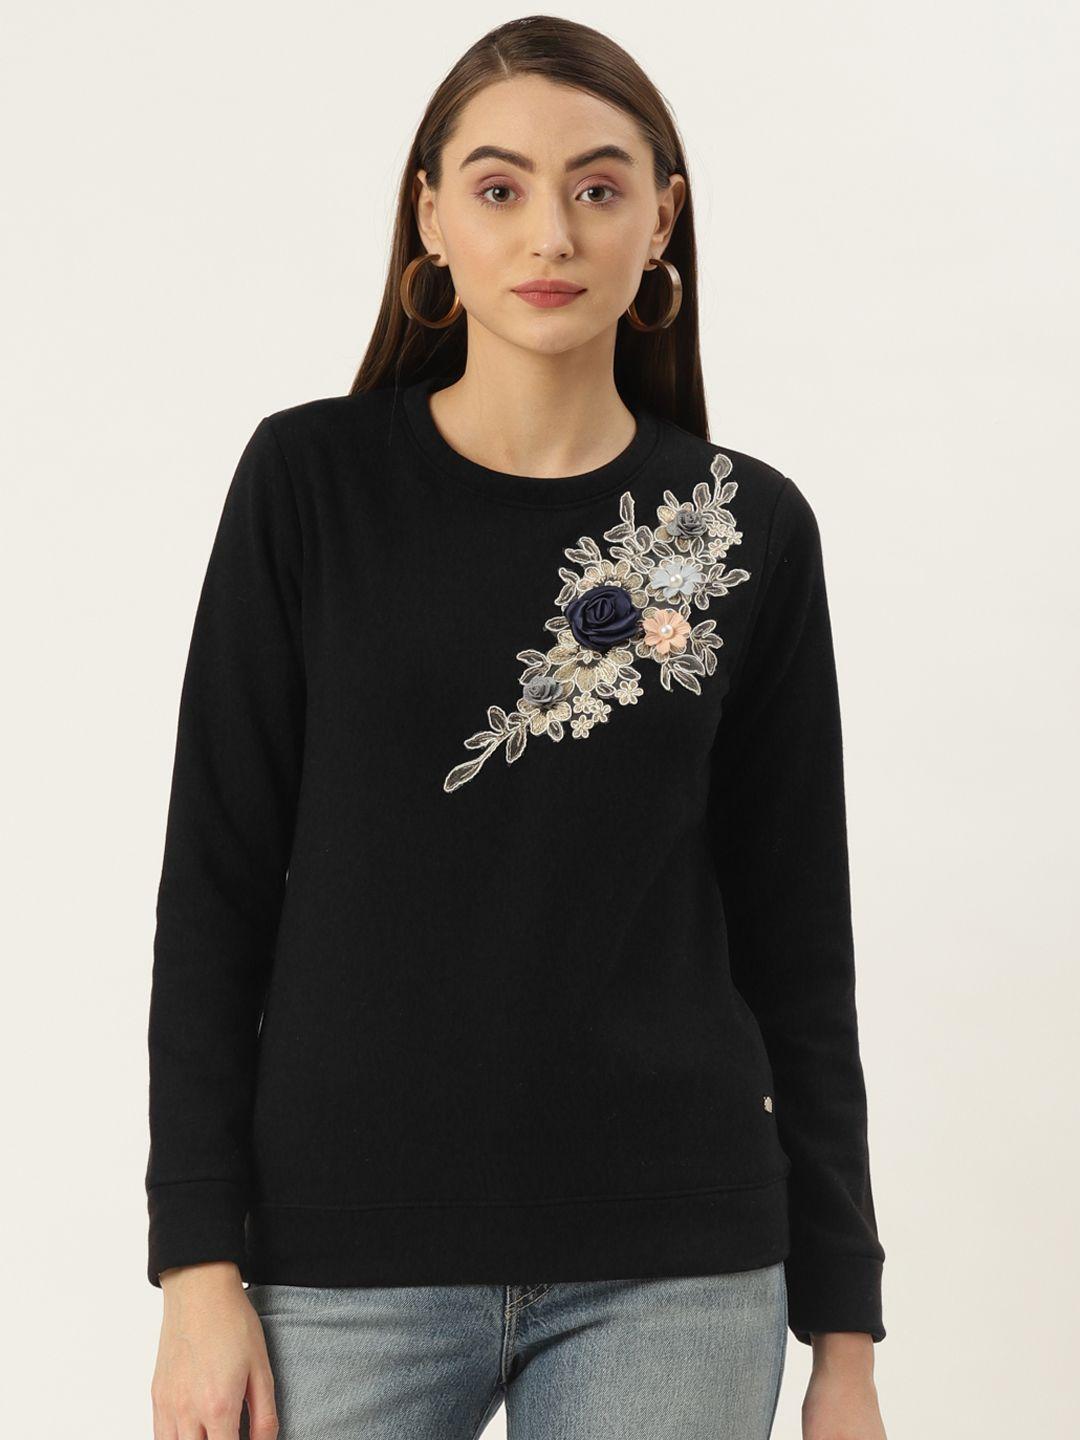 monte carlo women black floral embroidered sweatshirt